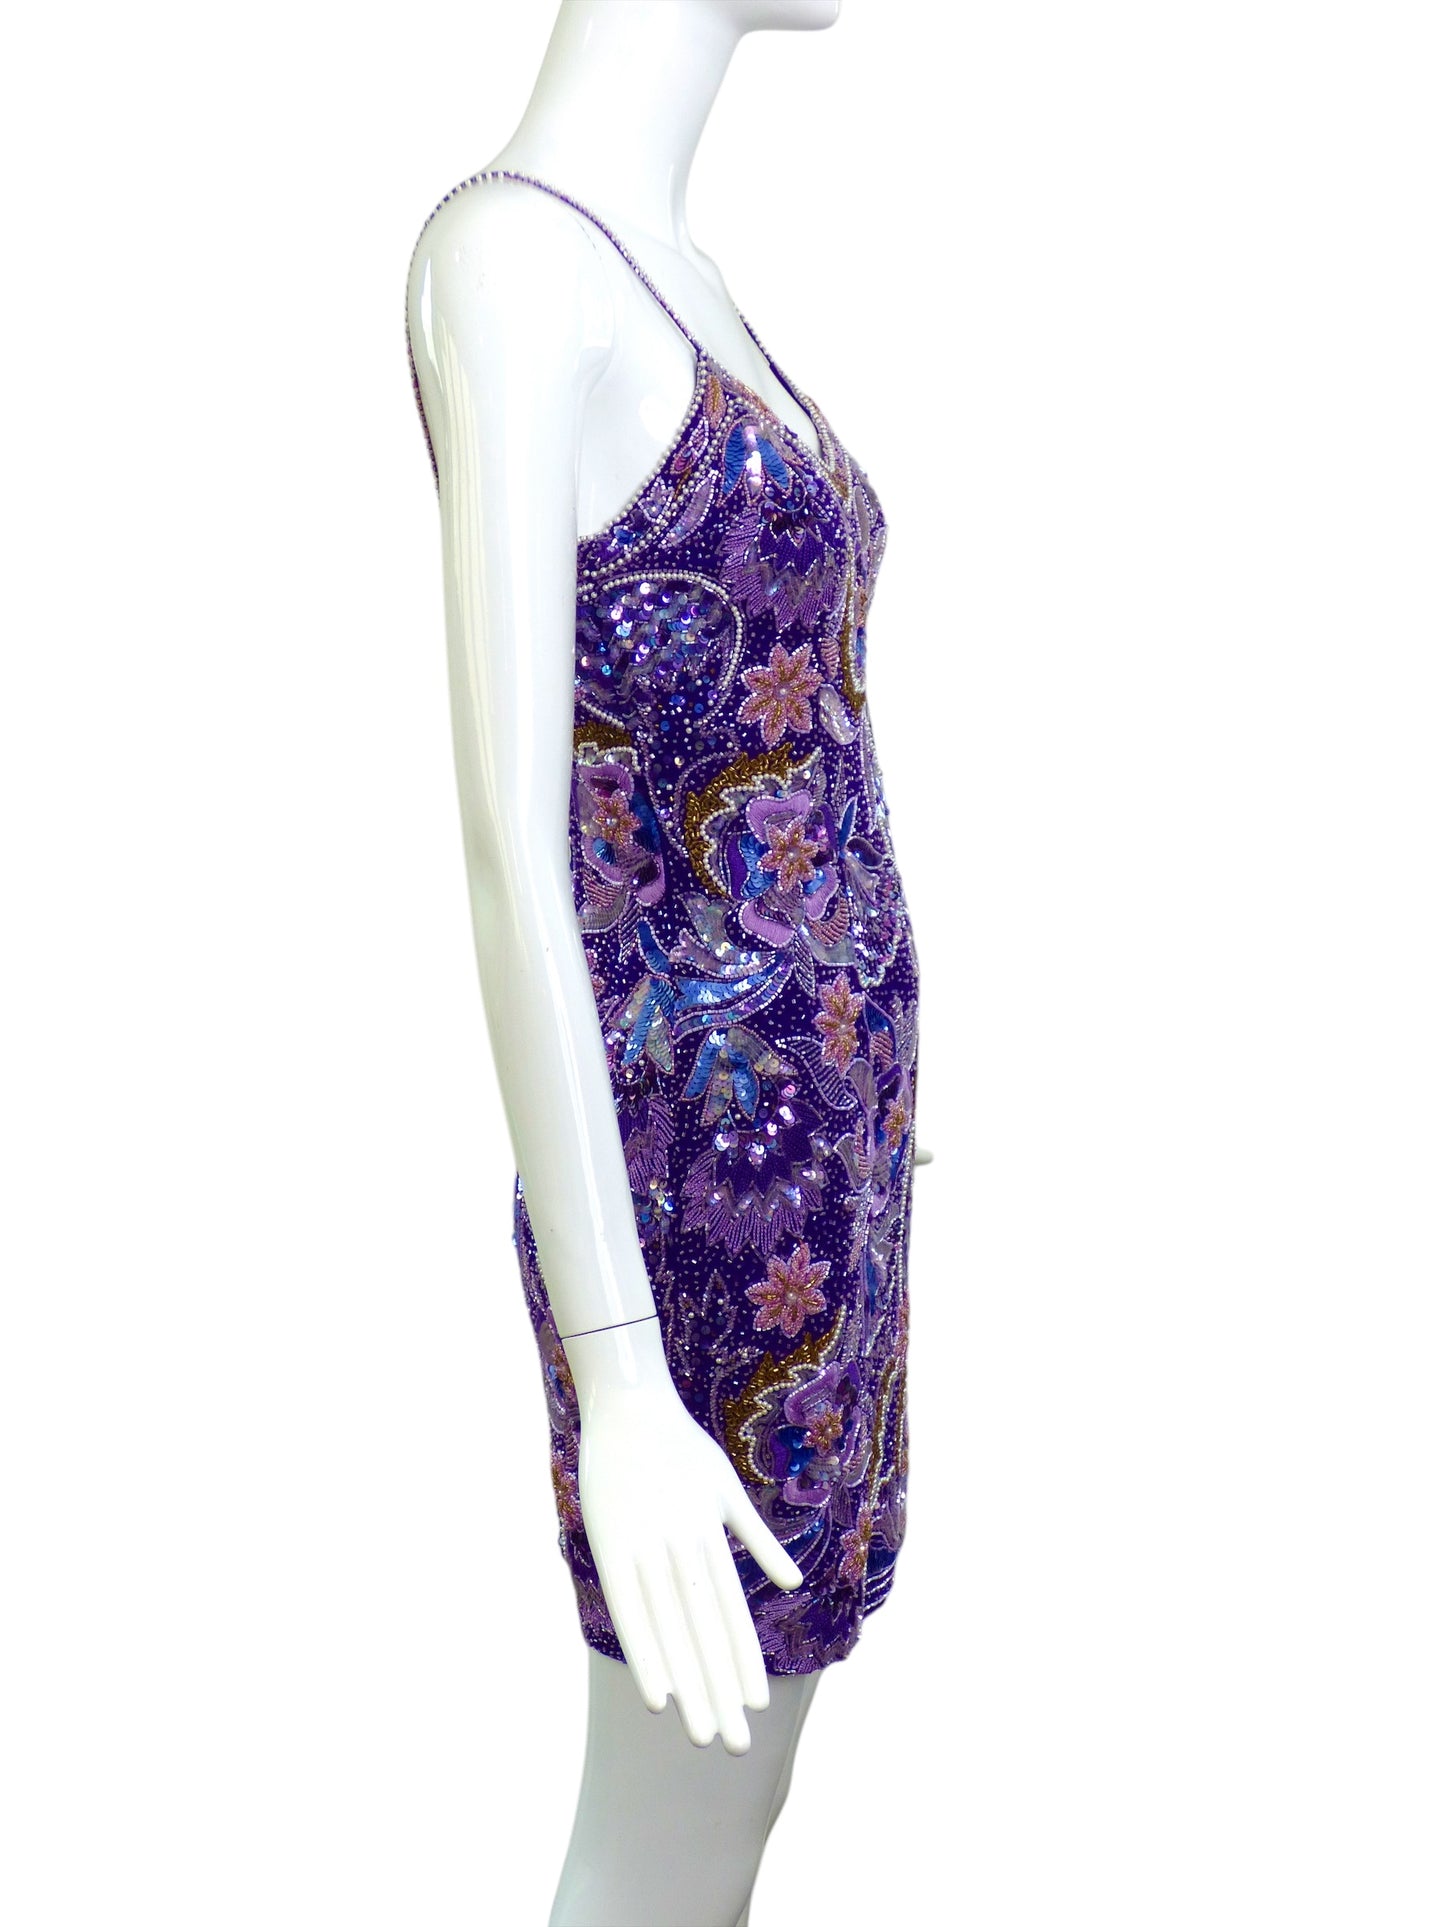 NAEEM KHAN- 90s Silk Beaded Mini Dress, Size 4